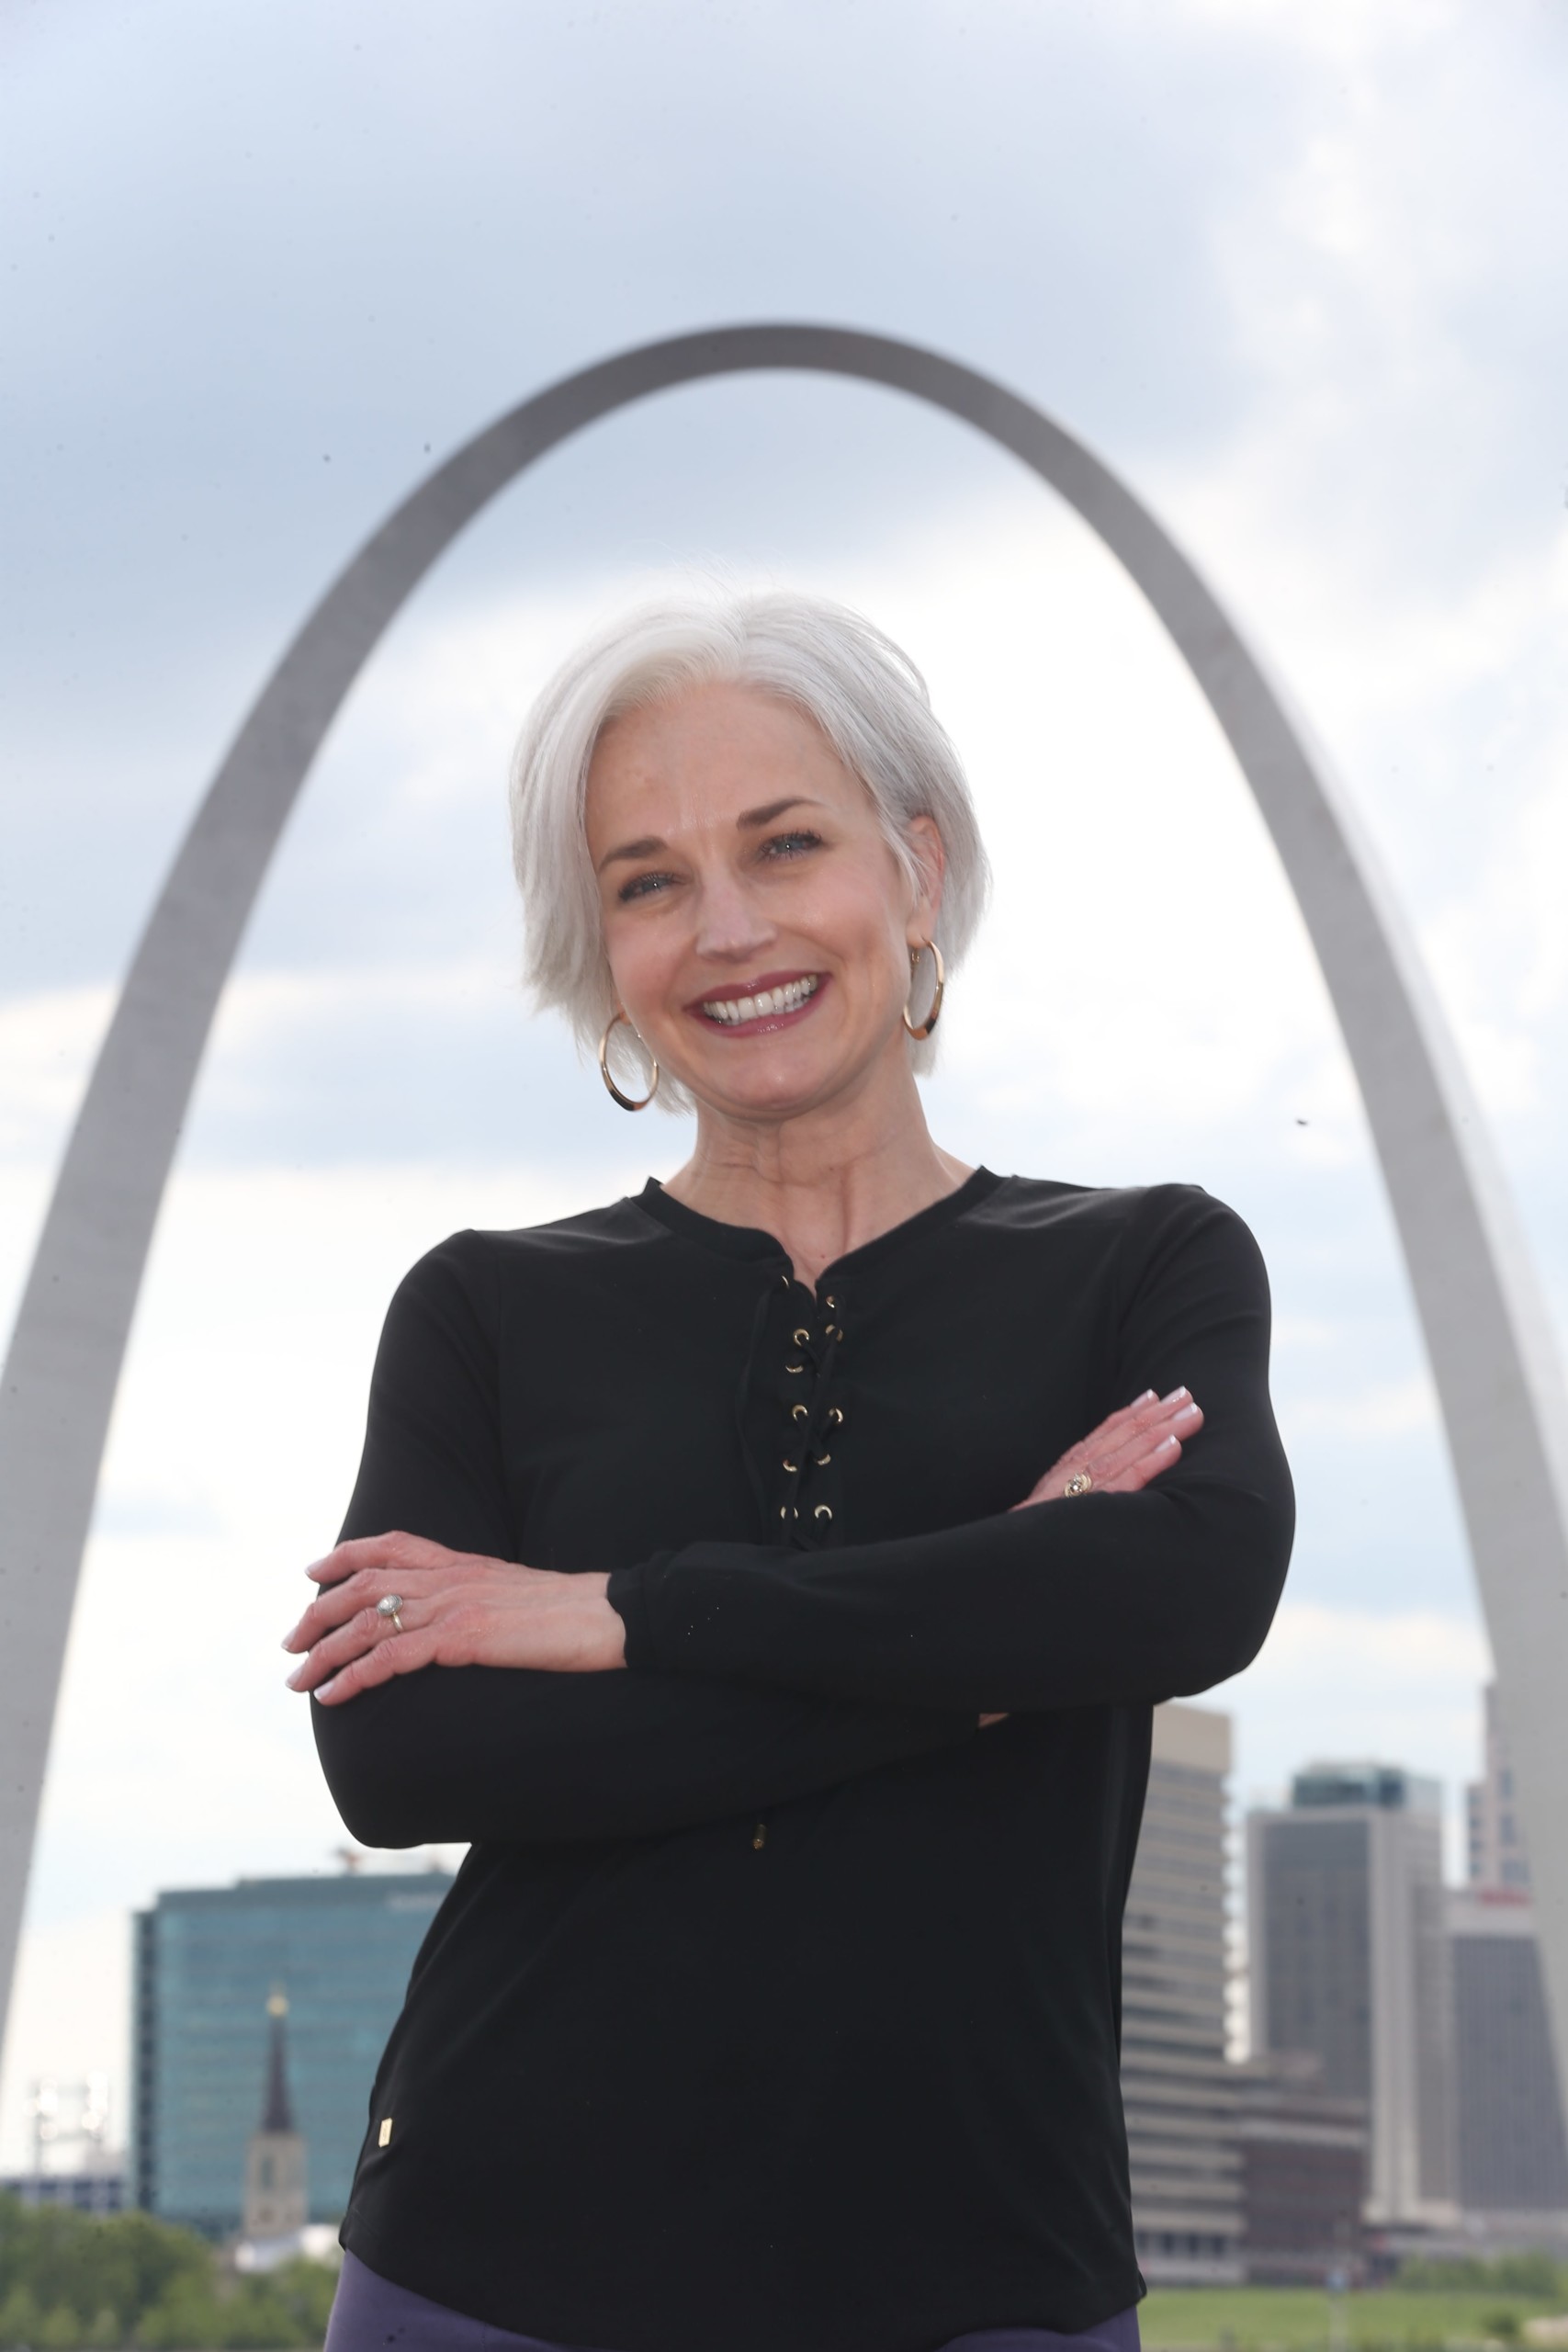 Missy Kelley, Senior Vice President, Greater St. Louis, Inc  on February 25, 2021